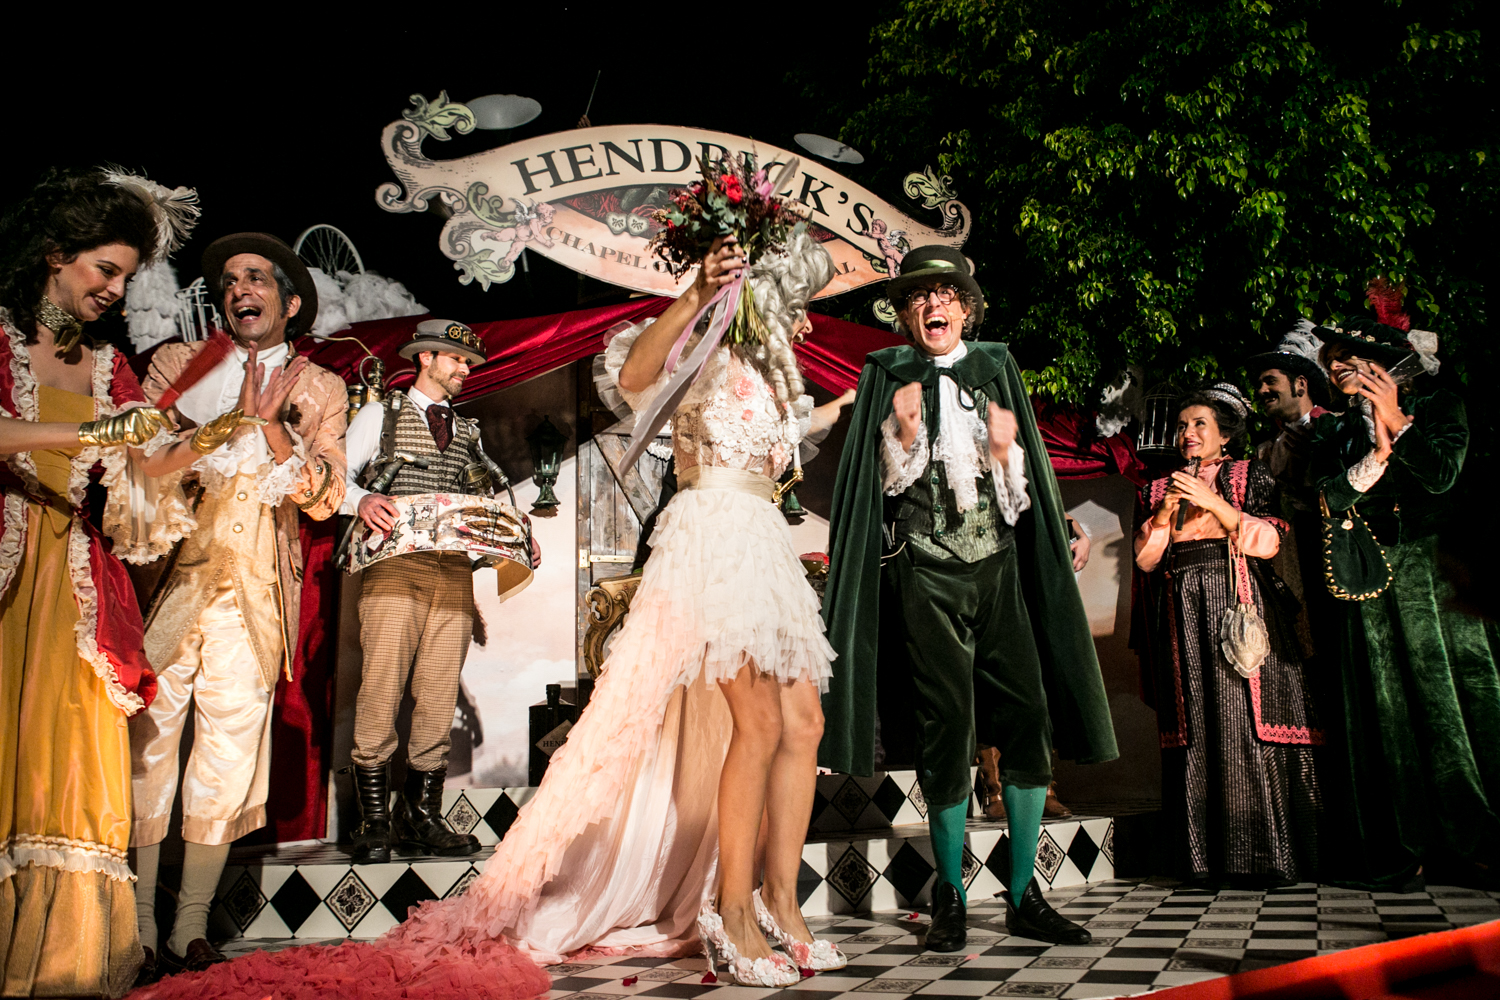 Hendrick’s Unusual Wedding de Lady Rose & Sir Pepino